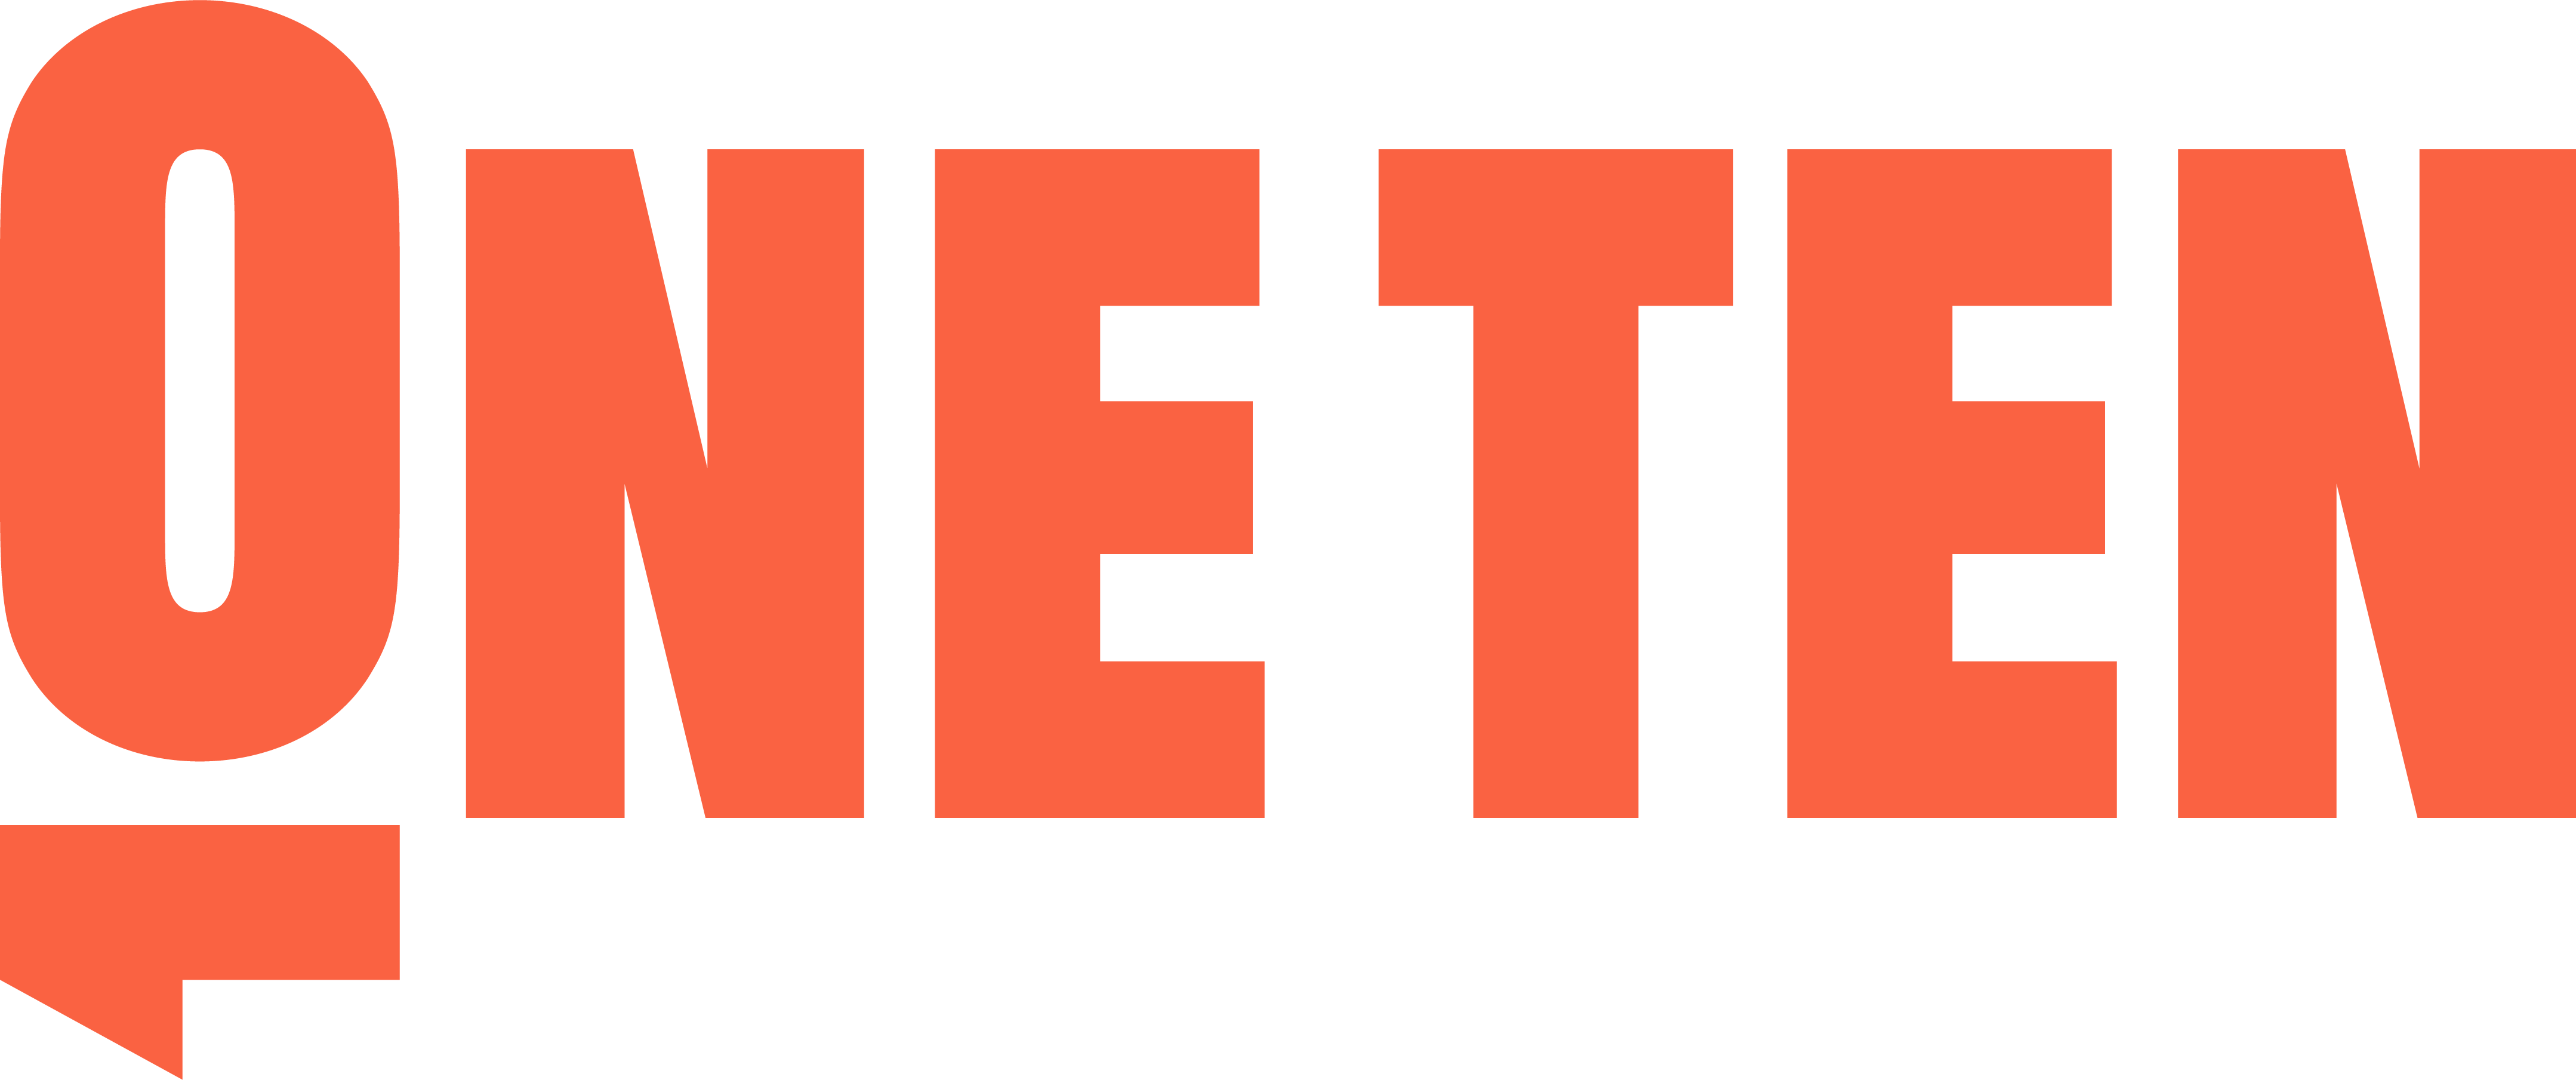 OneTen logo